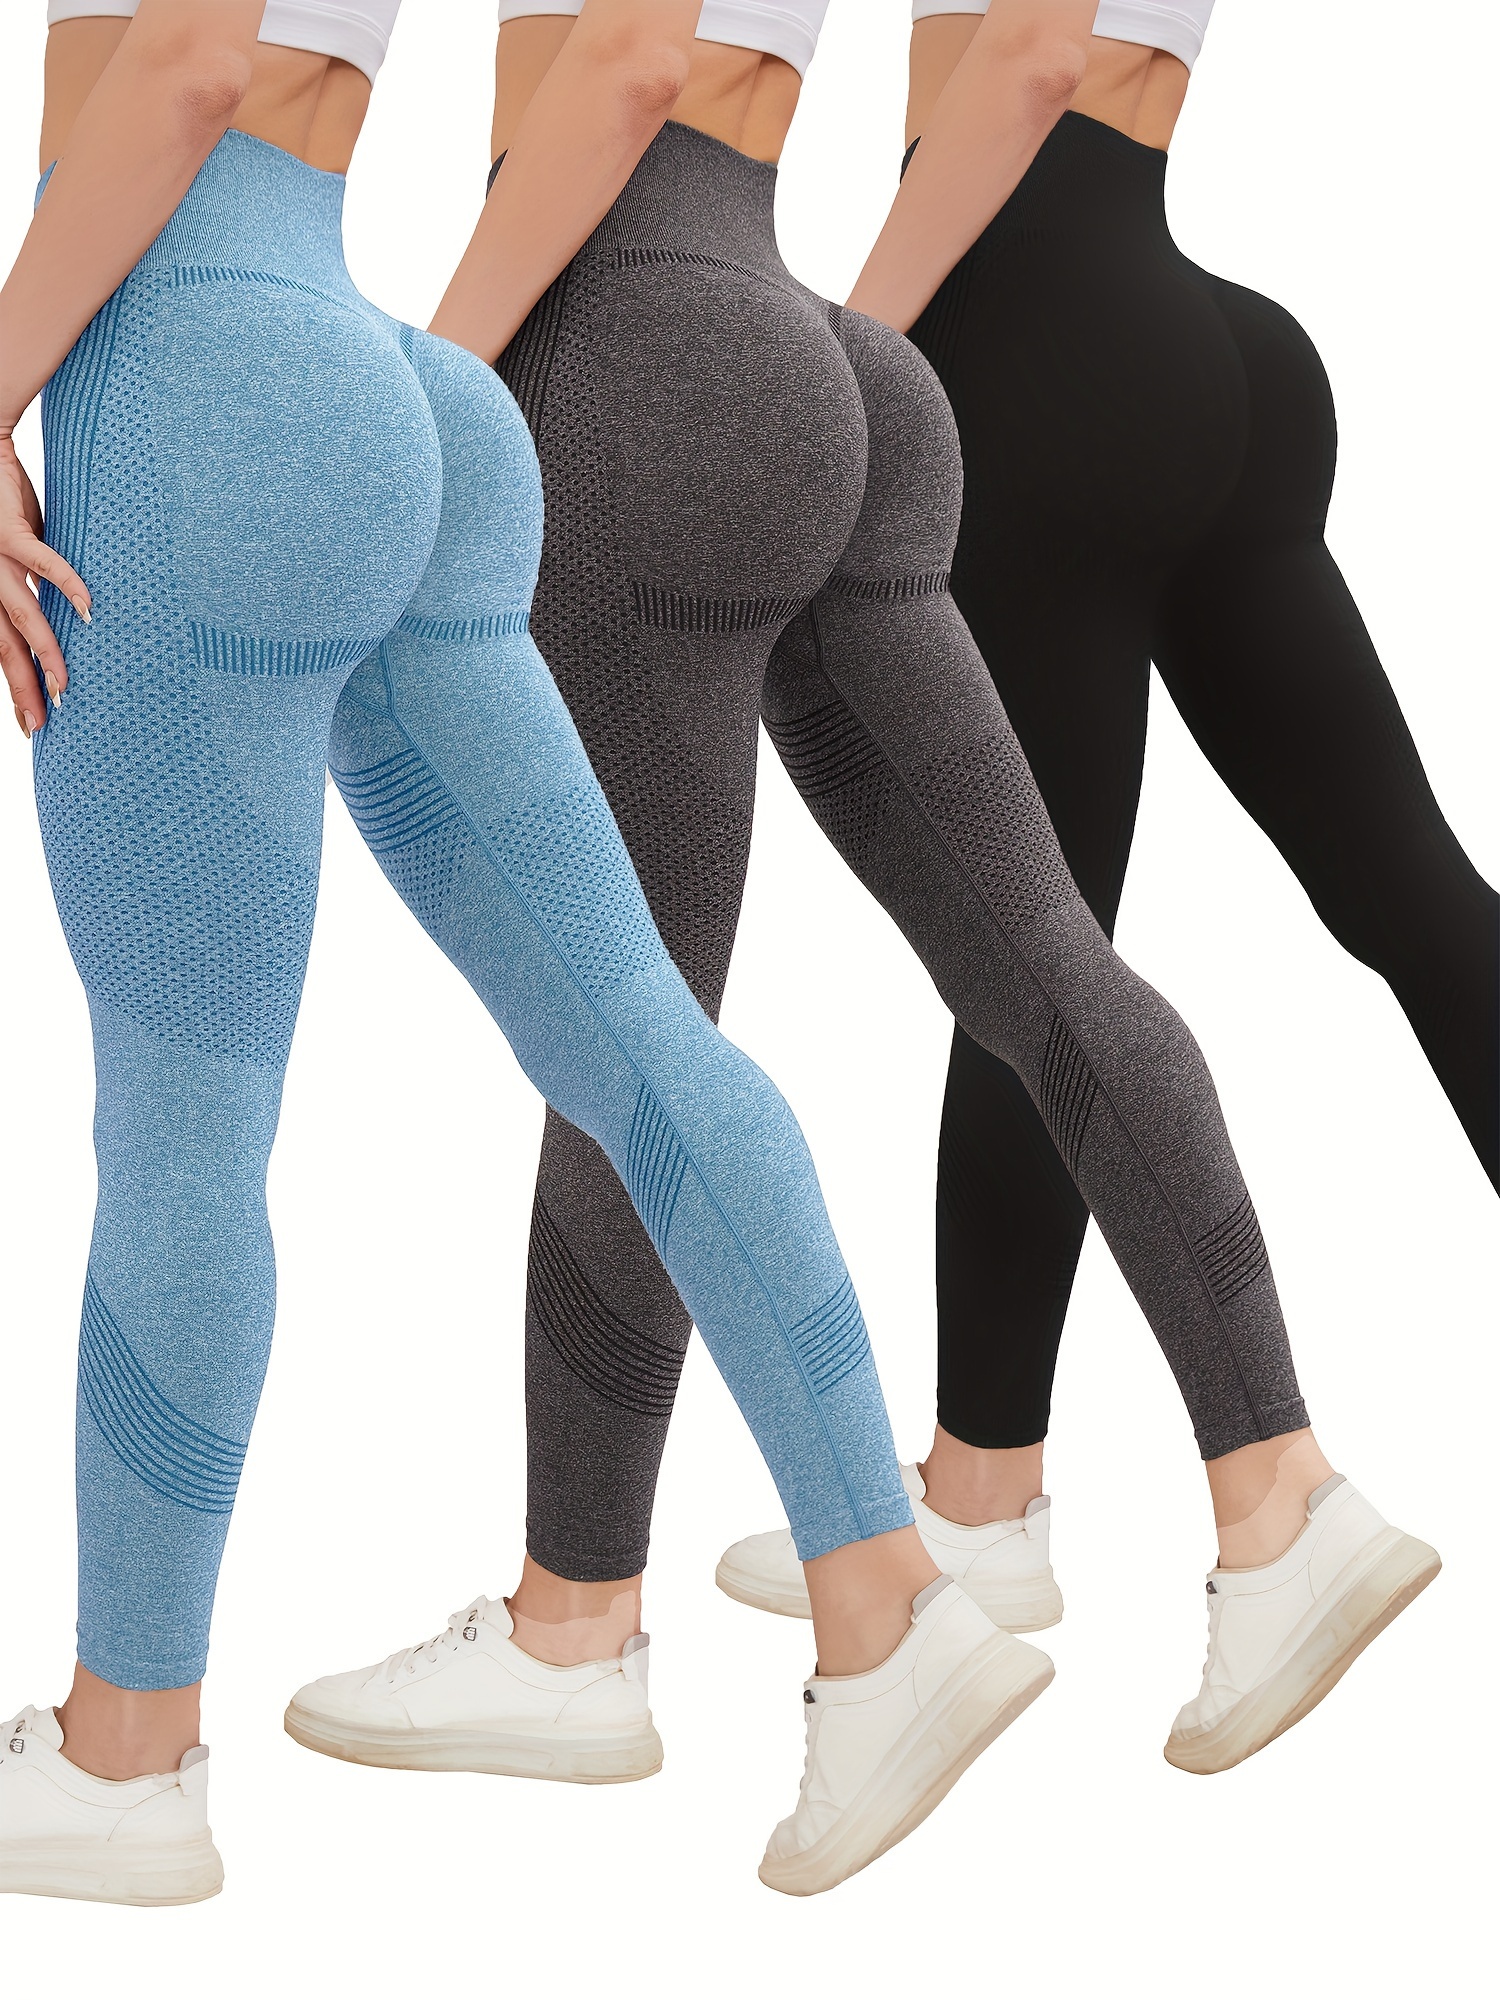 erleecy Gym Leggings for Women Butt Lifting High Waist Tummy